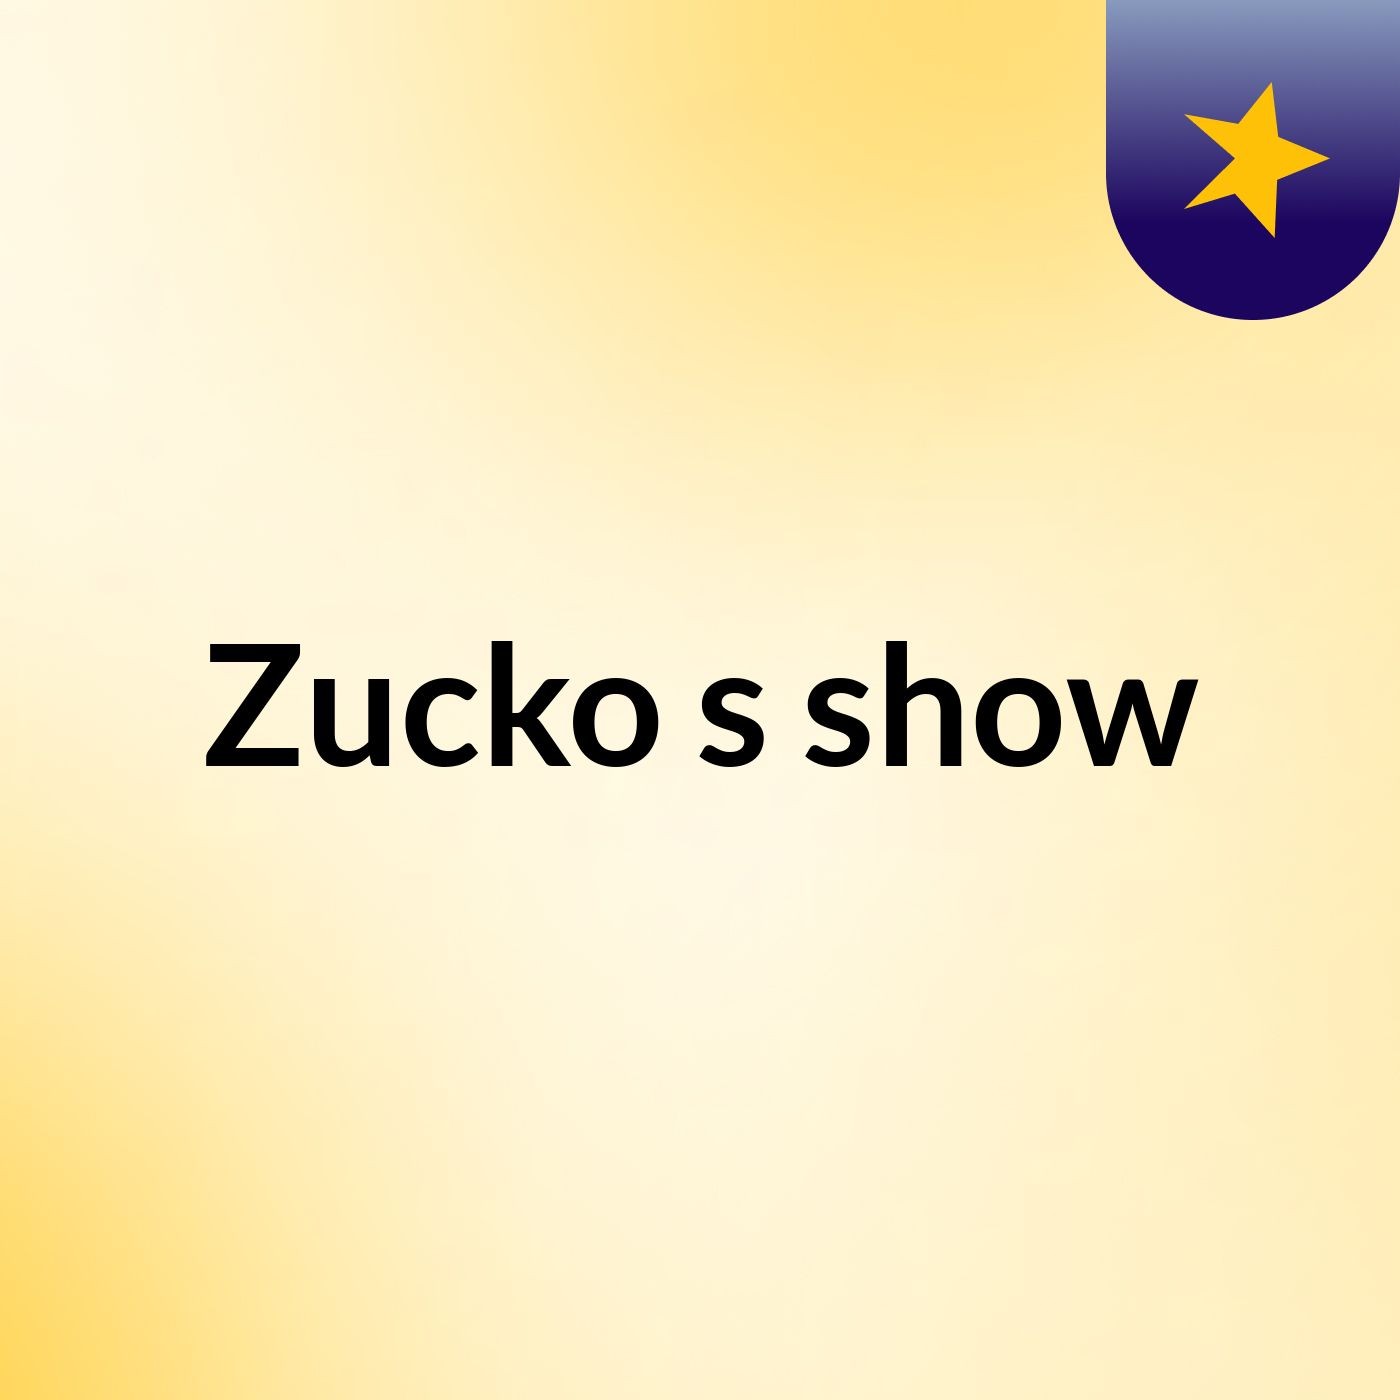 Zucko's show